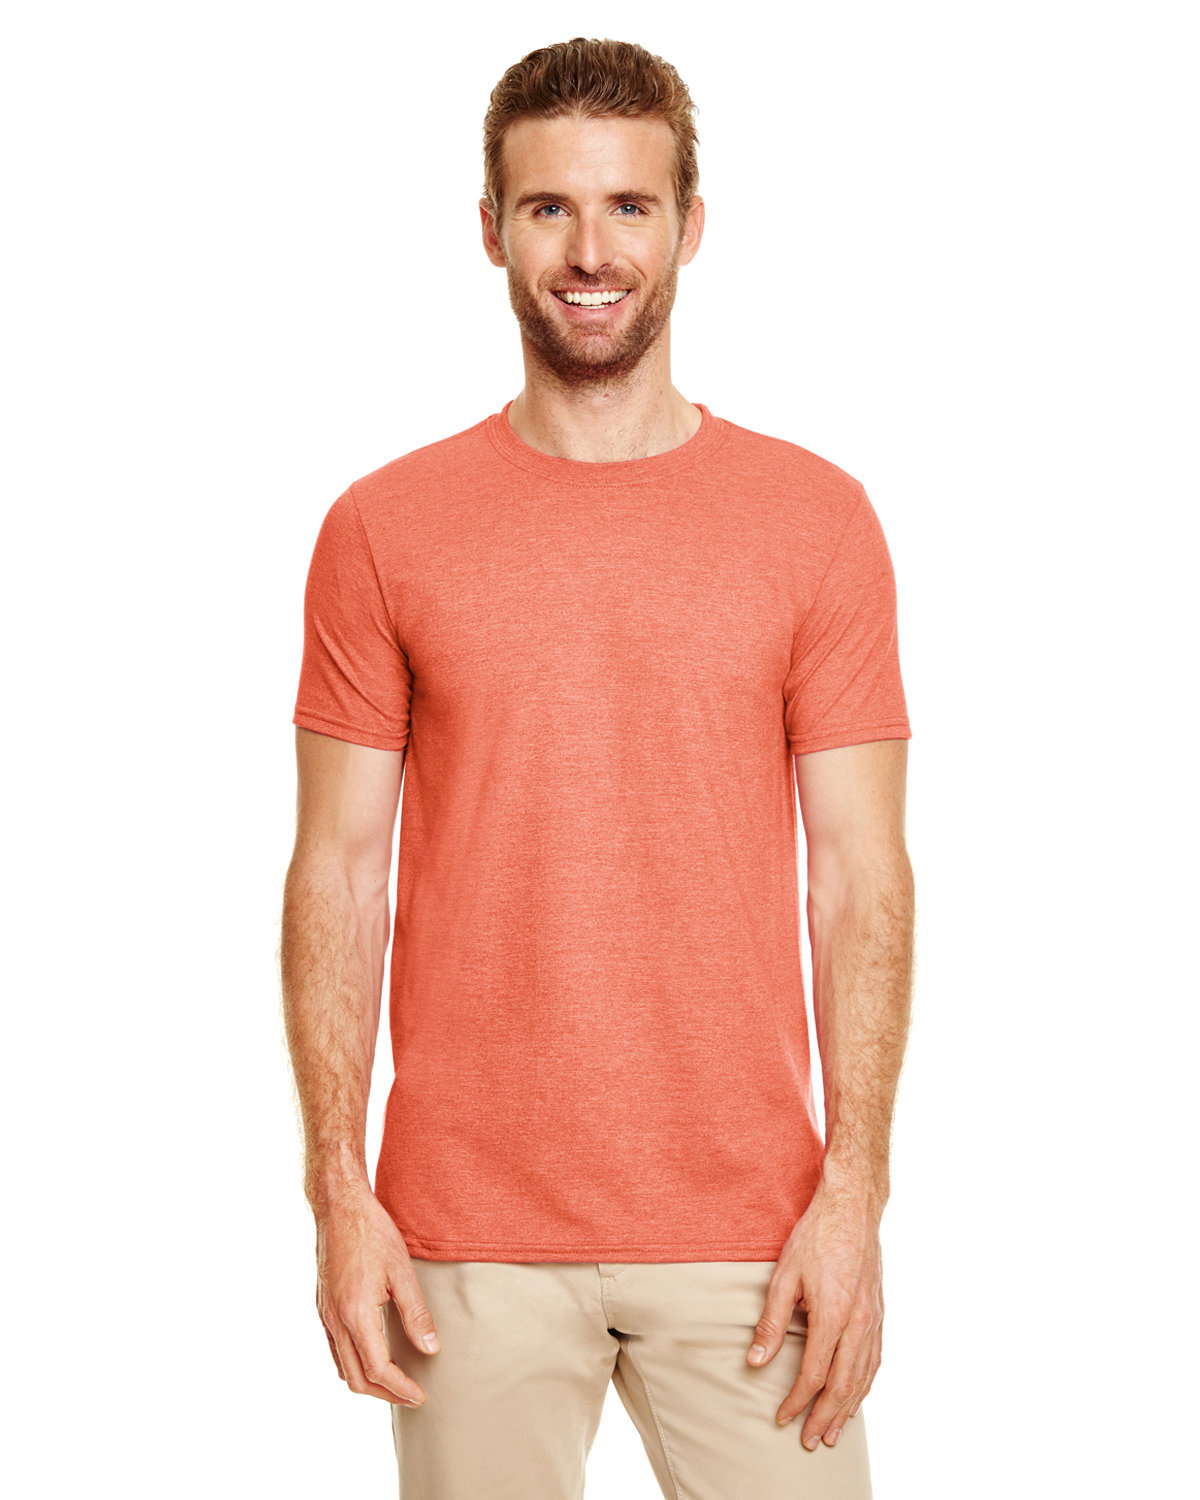 Gildan Softstyle Ringspun Cotton T-Shirt - Adult Men's & Kids Sizes